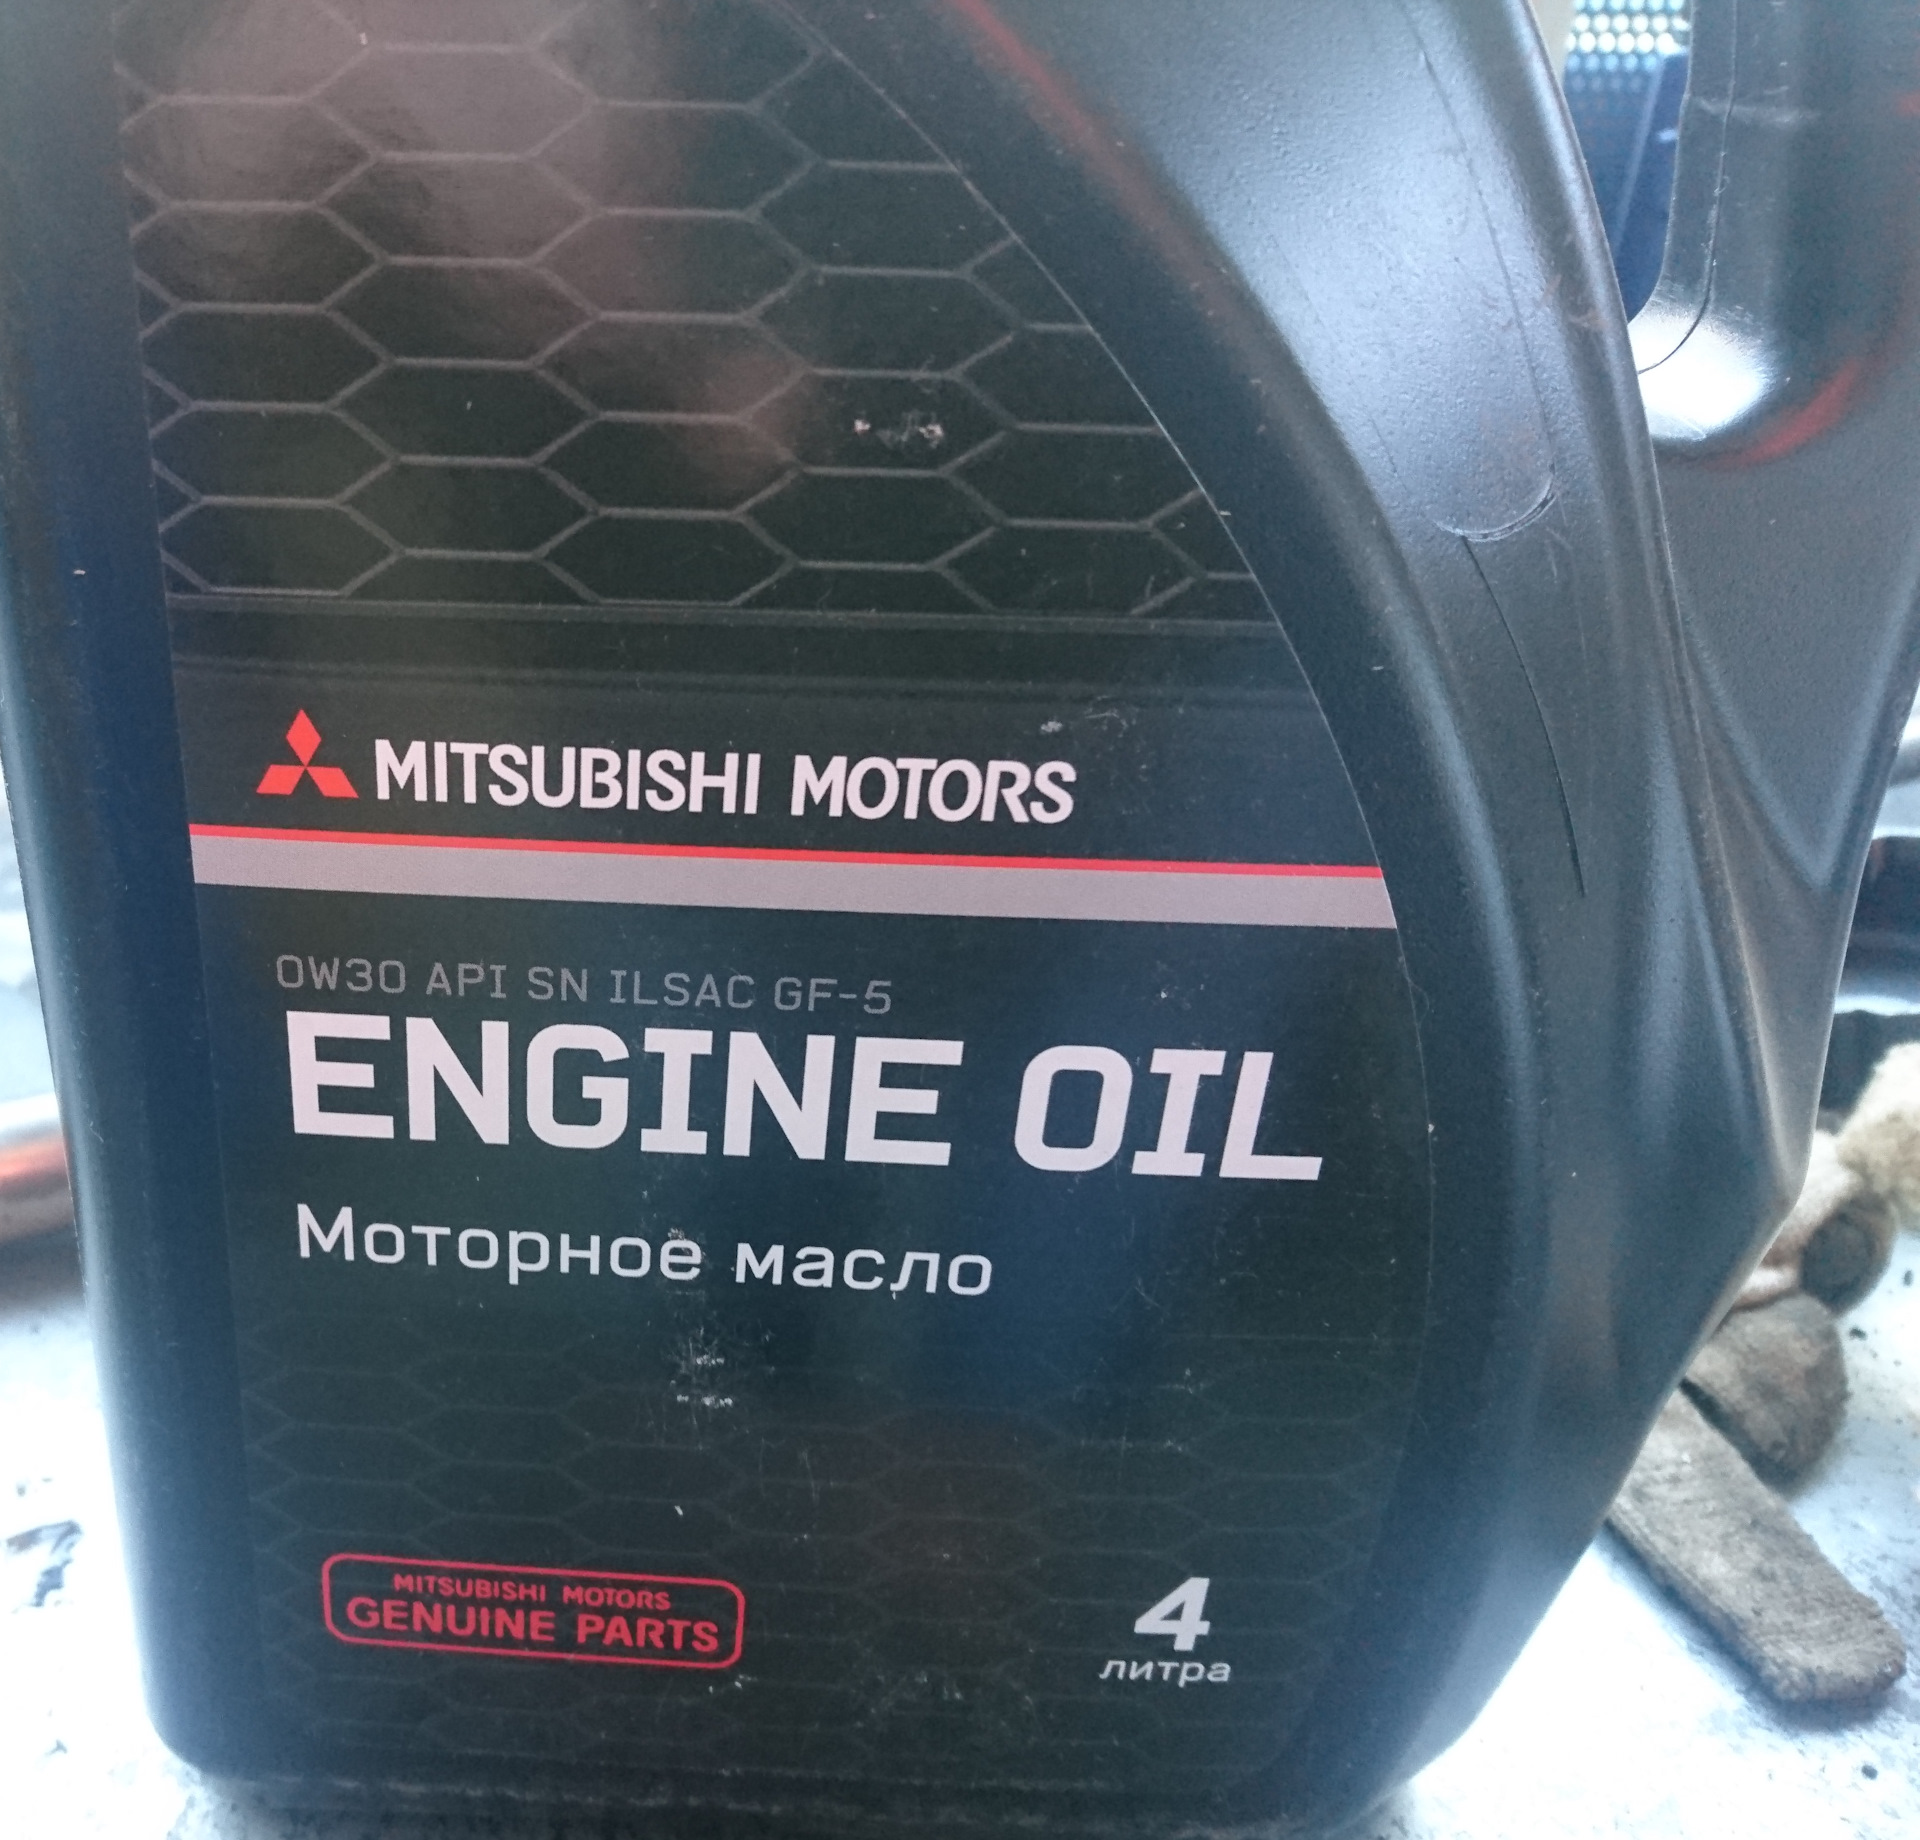 Моторное масло lemark. Моторное масло Митсубиси Паджеро. Engine Oil ow 30 Mitsubishi. Engine Oil моторное масло Митсубиси 4 литра. Моторное масло Митсубиси Аутлендер 2 литра.